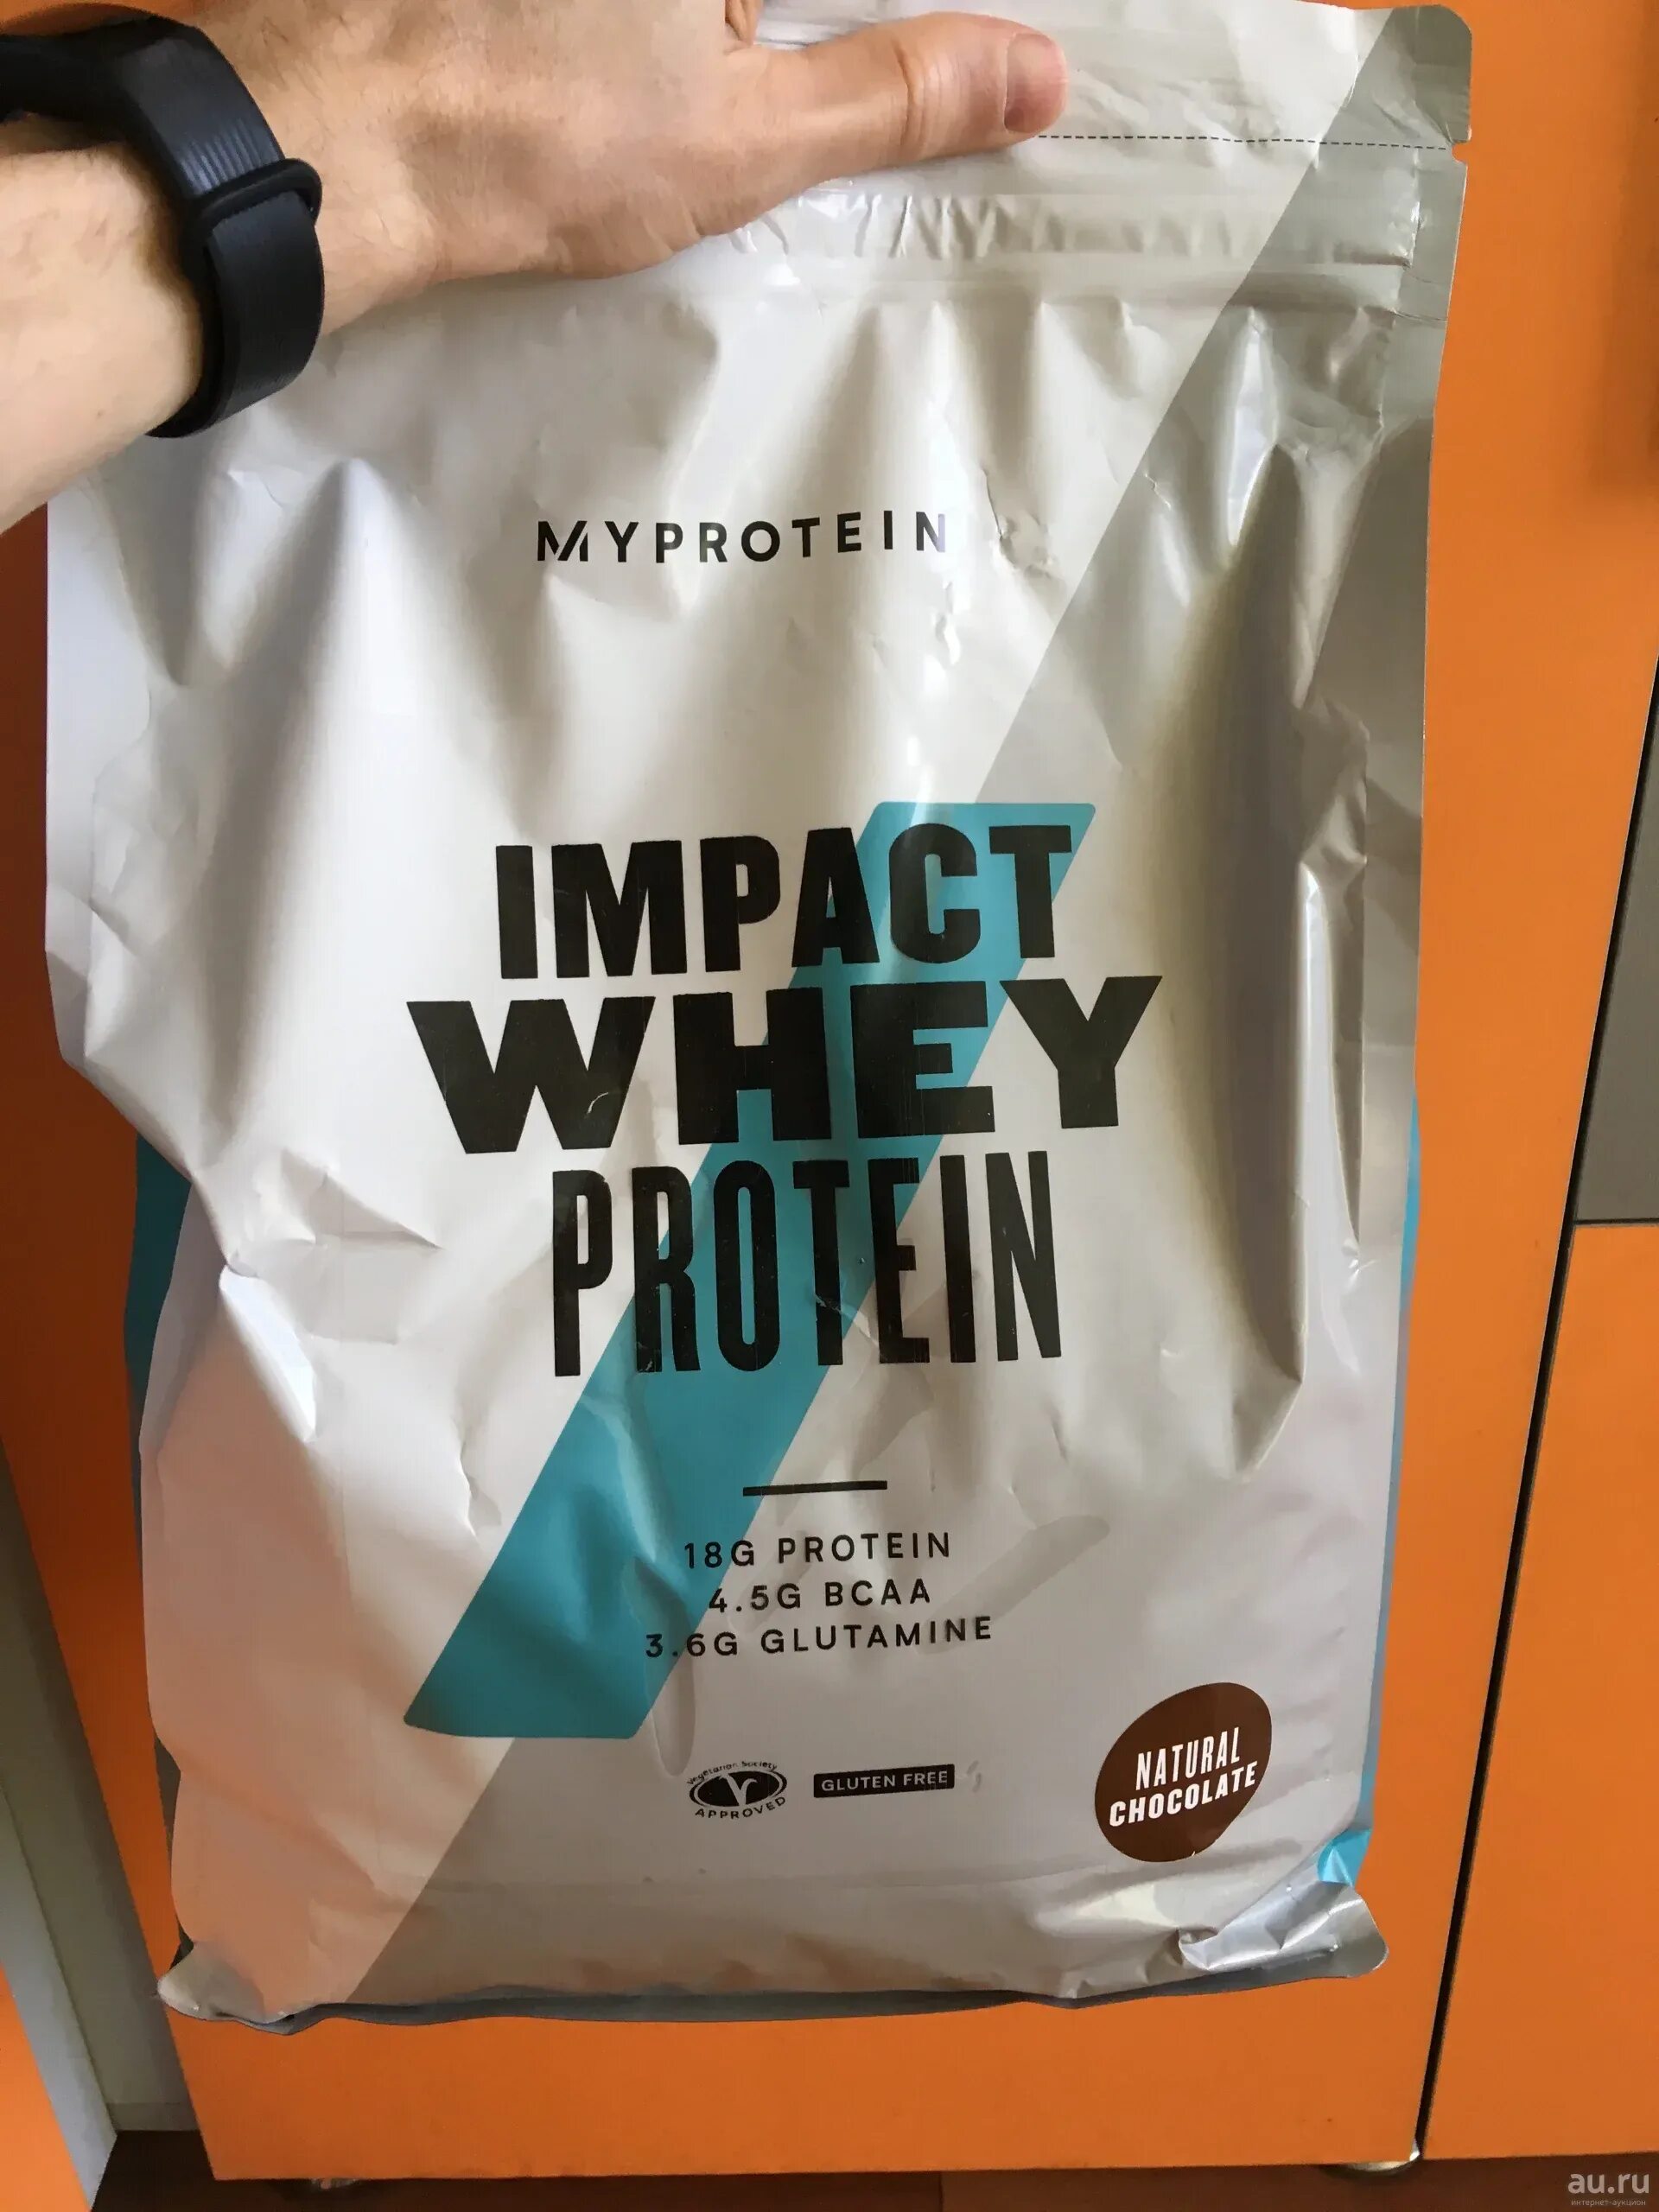 Протеин маи. Myprotein Impact Whey. Myprotein Impact Whey Protein. Сывороточный протеин (Impact Whey Protein). Протеин Whey Protein пакеты.